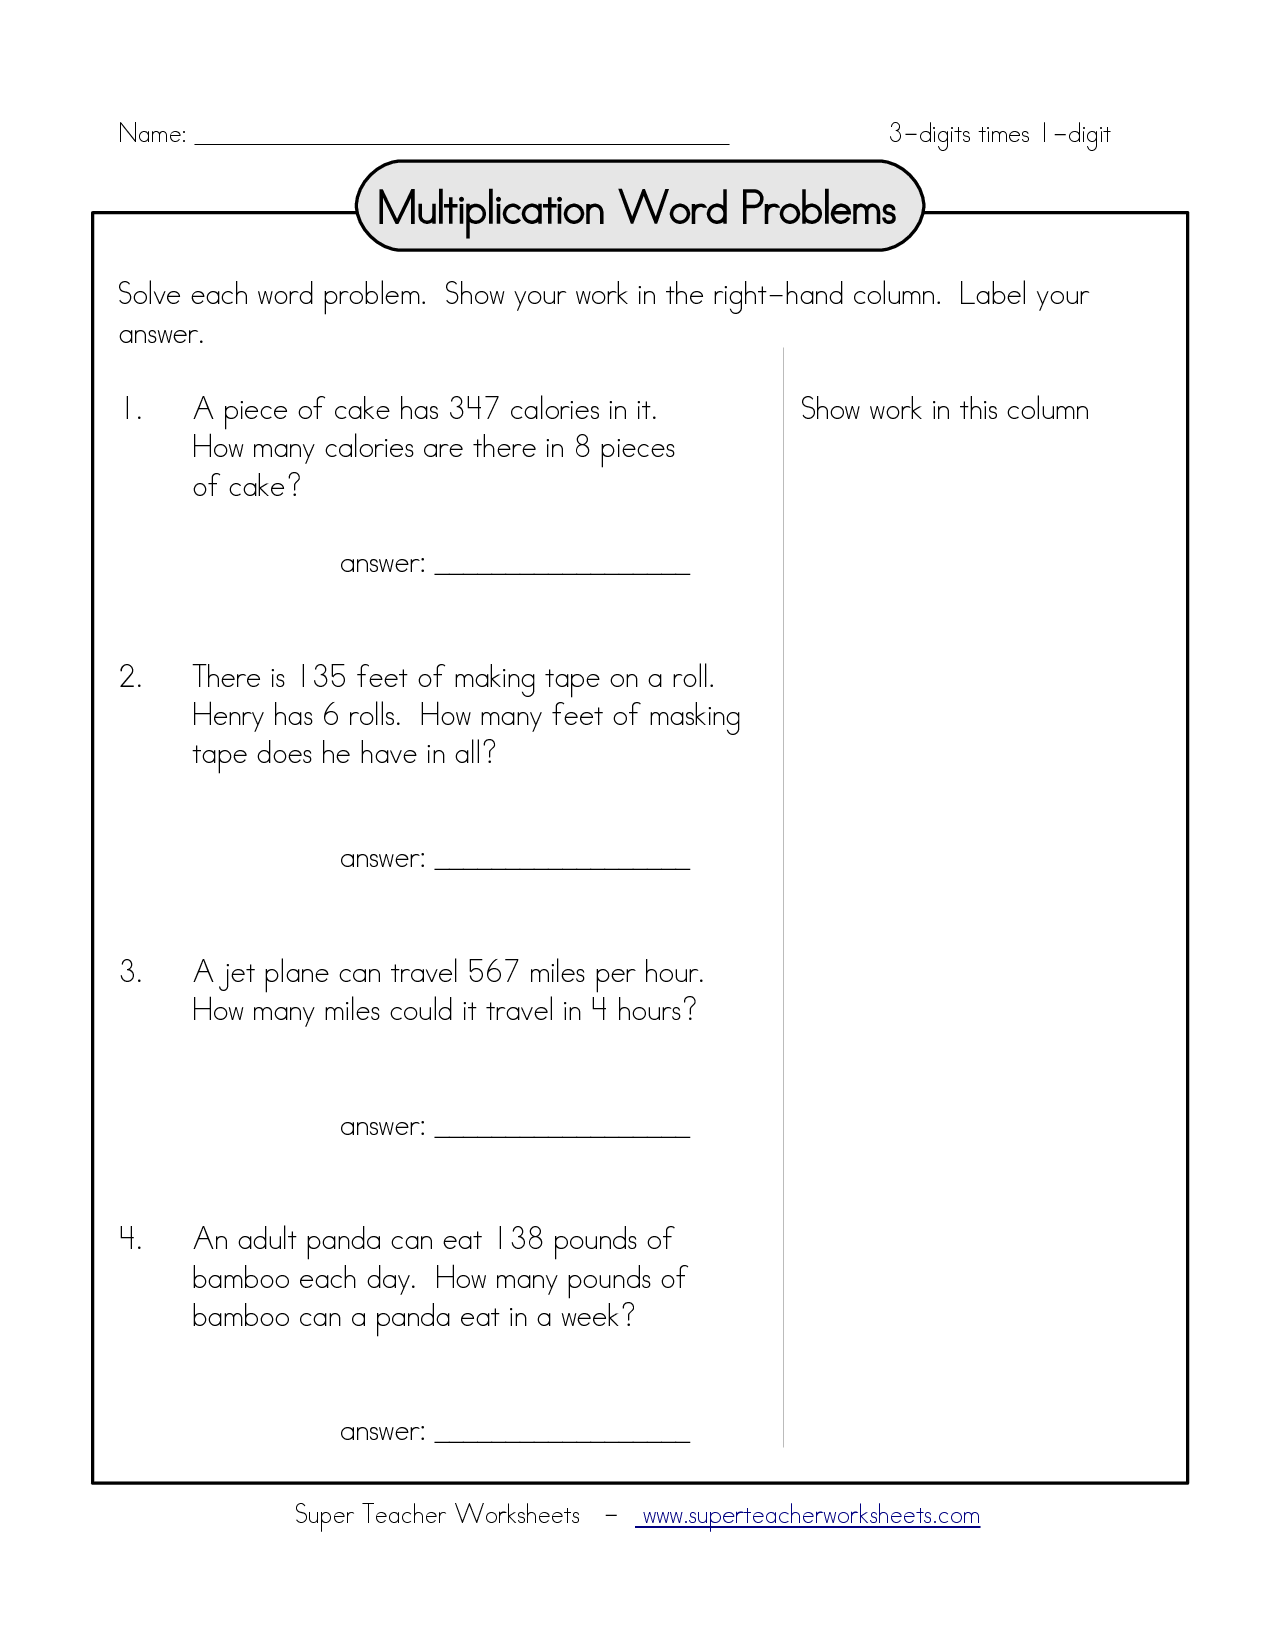 multiplication word problems vocabulary